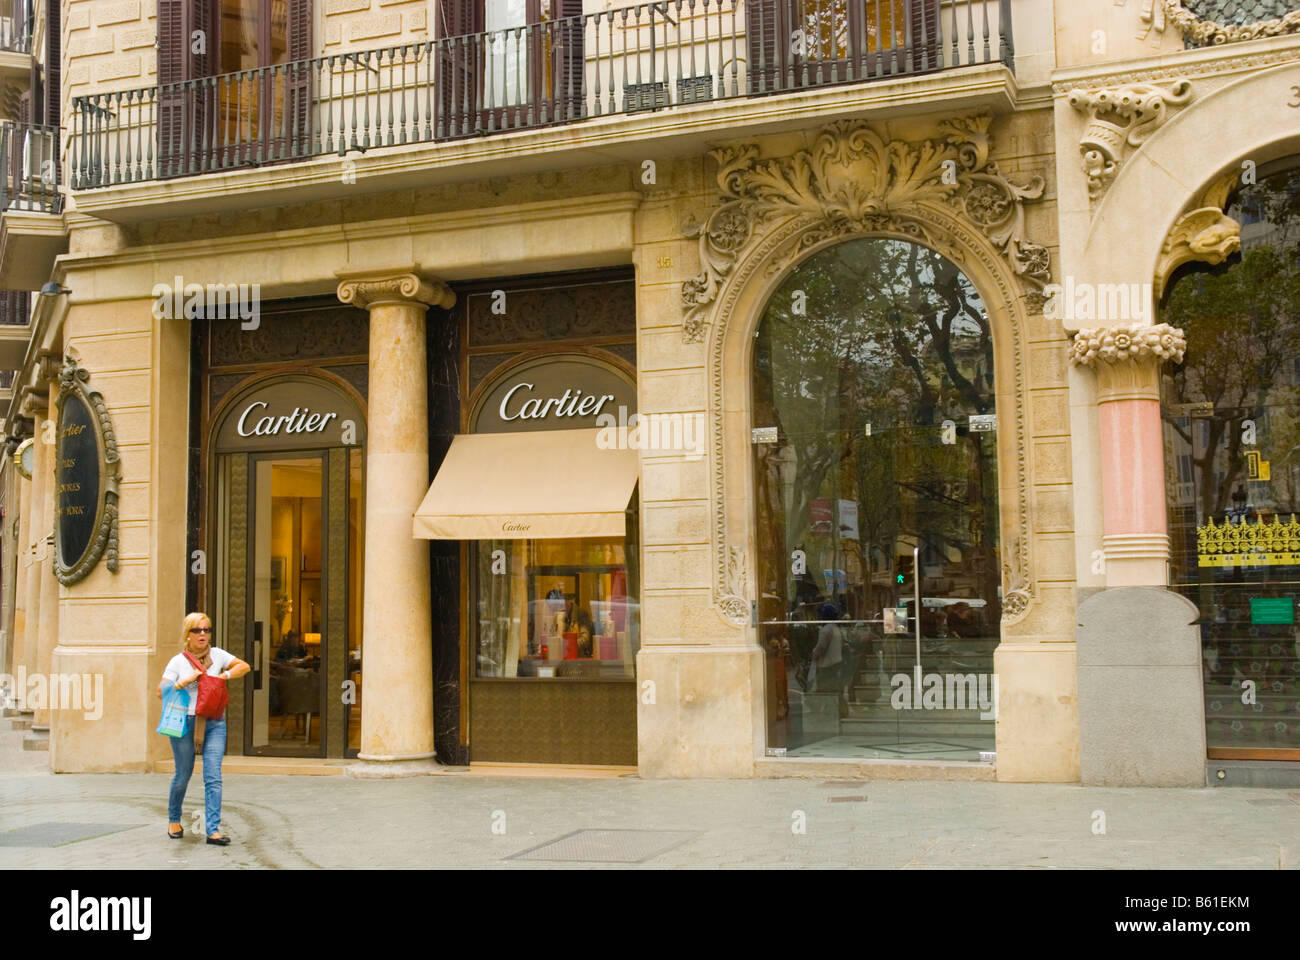 cartier shop barcelona